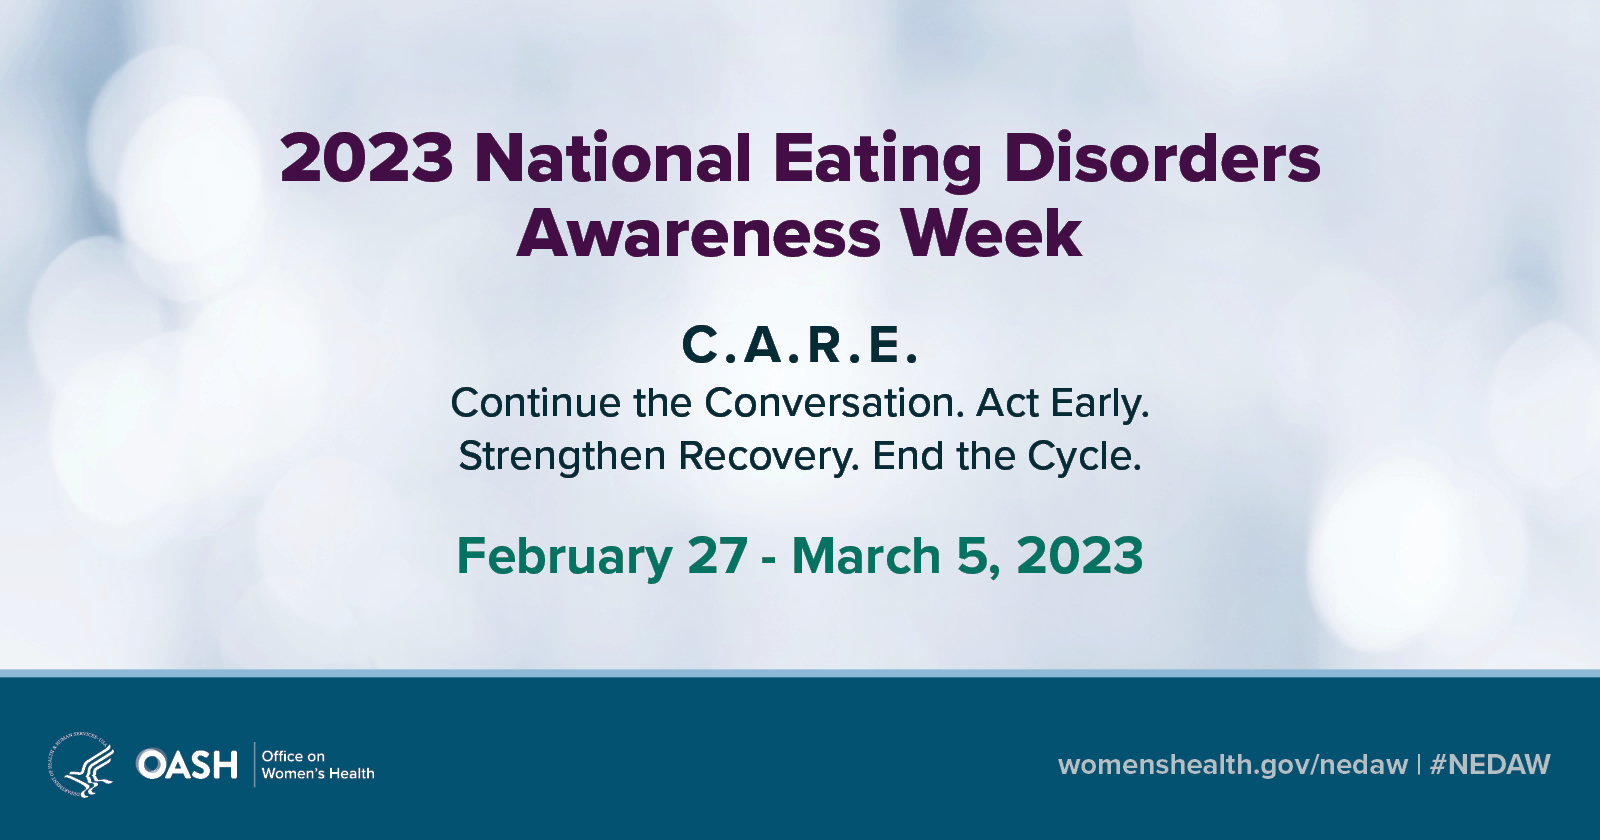 Advertisement for 2023 National Eating Disorders Awareness Week